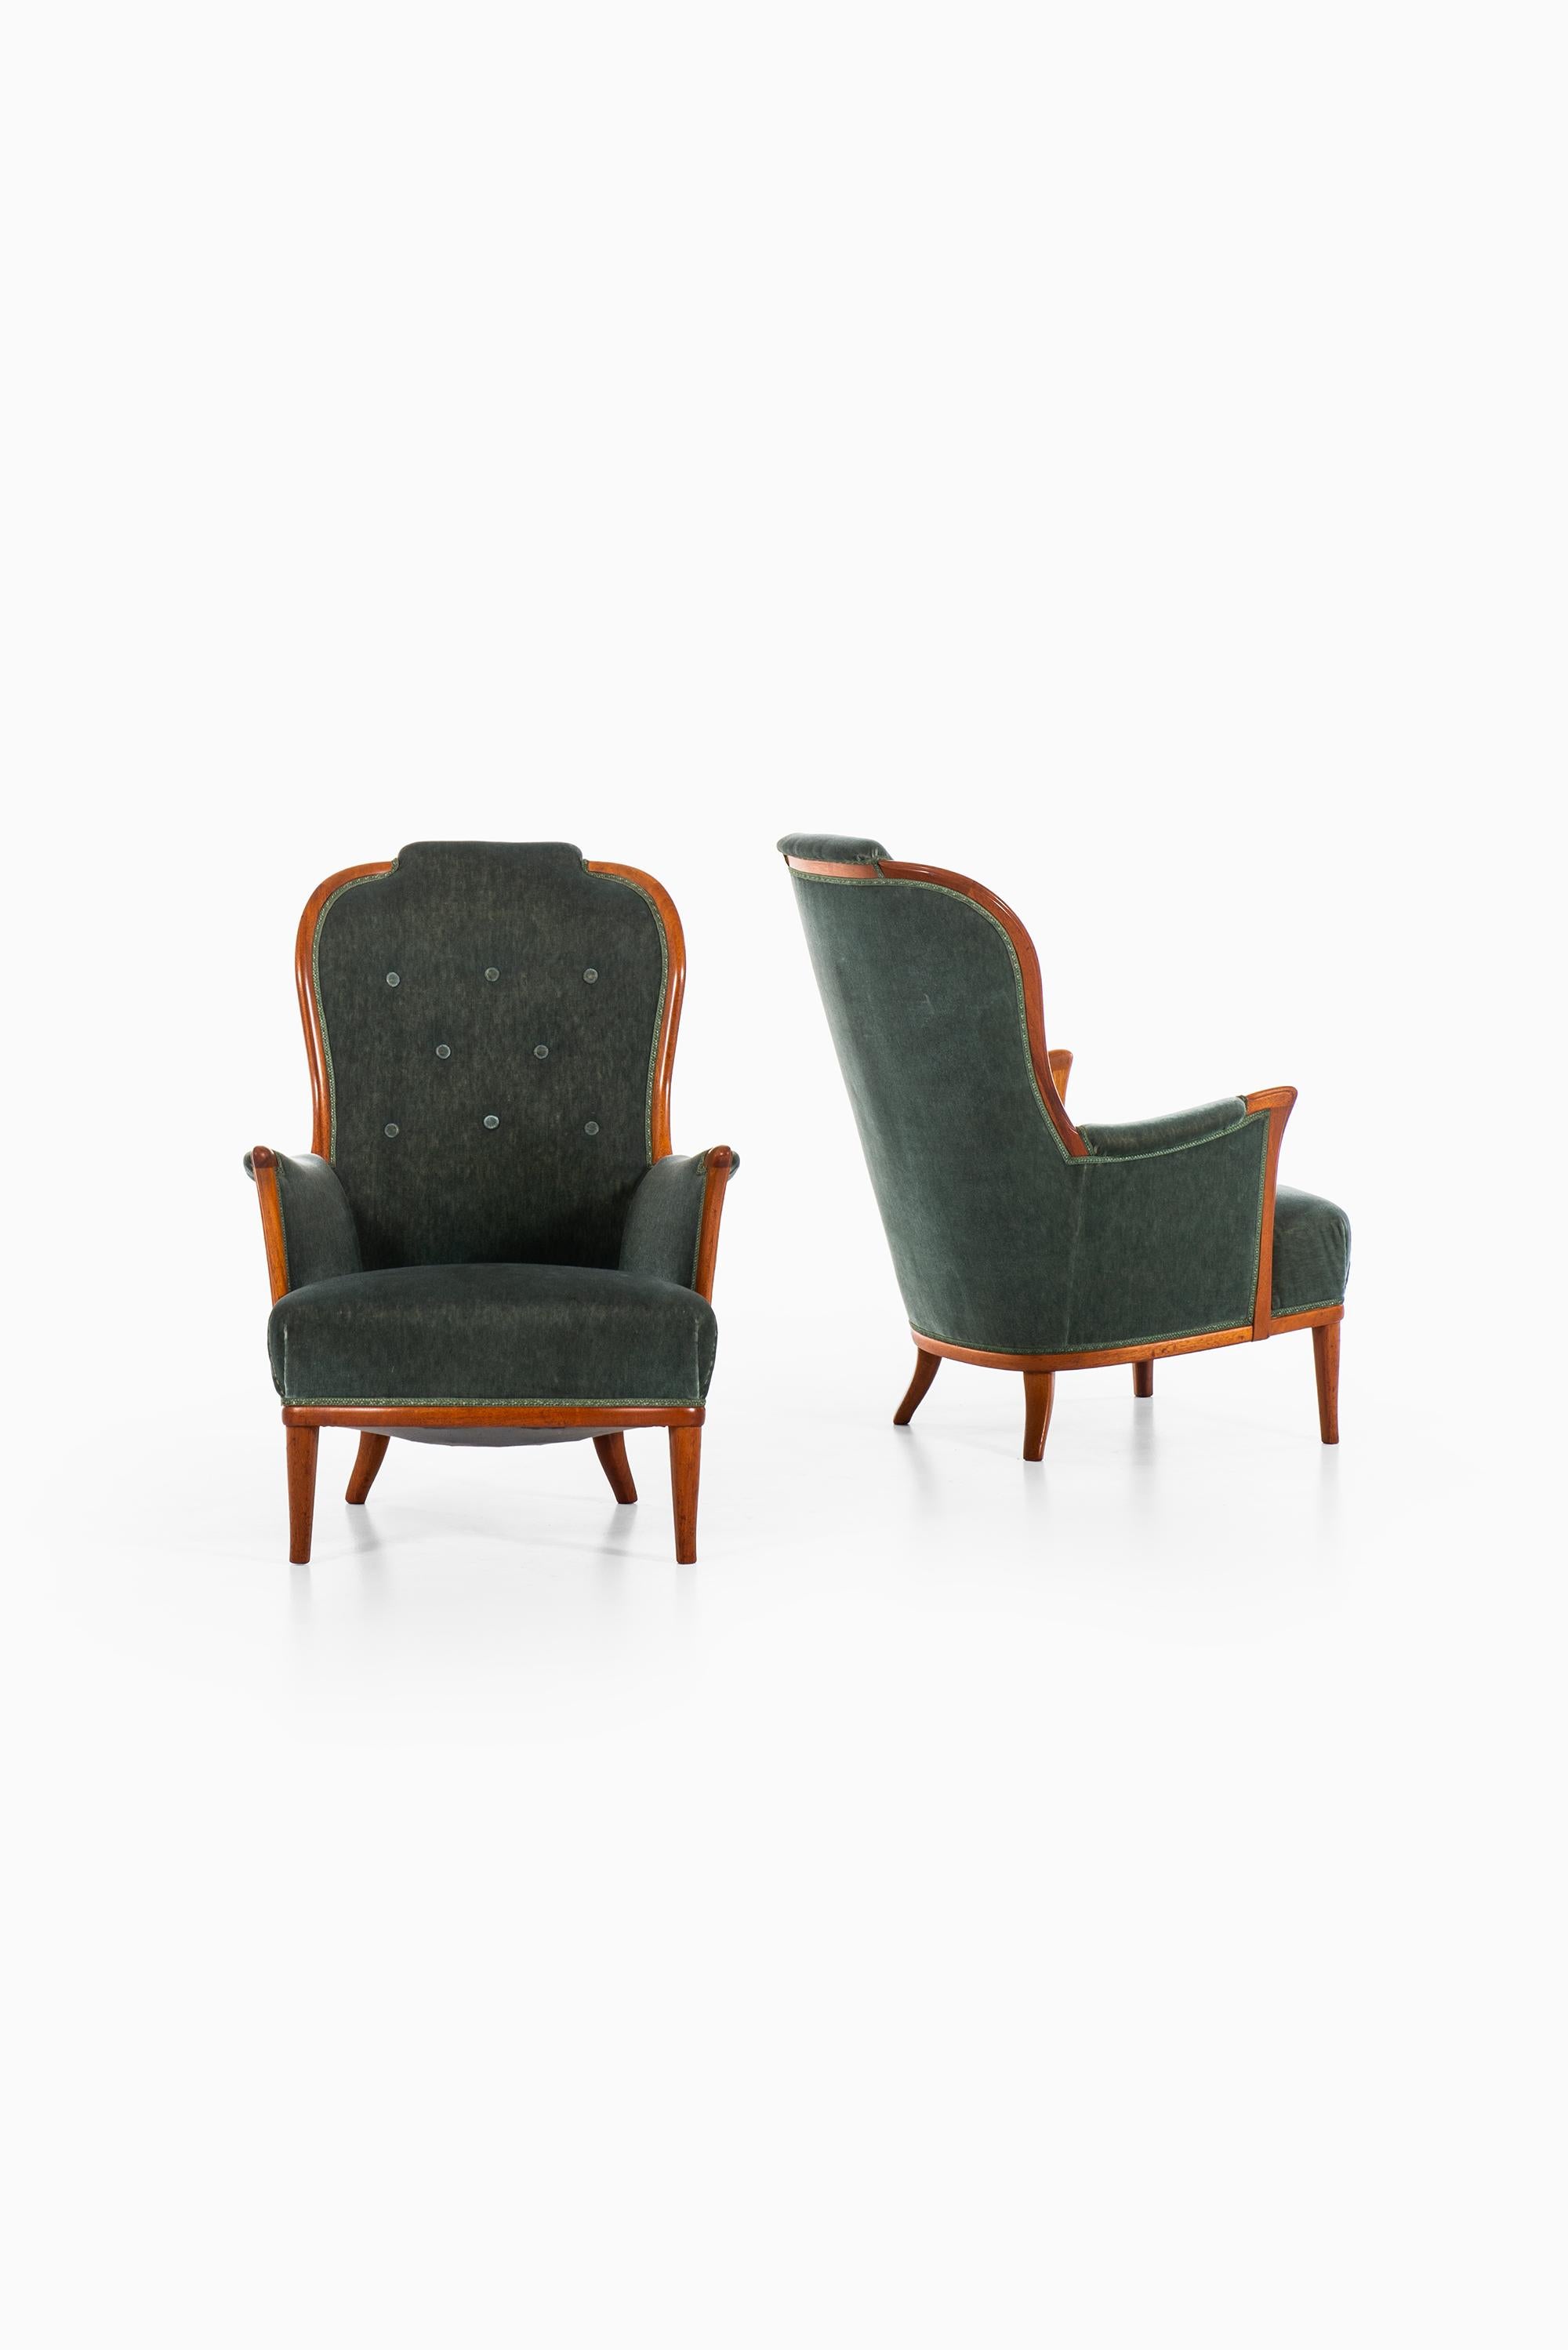 Pair of easy chairs model Vår fru designed by Carl Malmsten. Produced by Bodafors in Sweden.